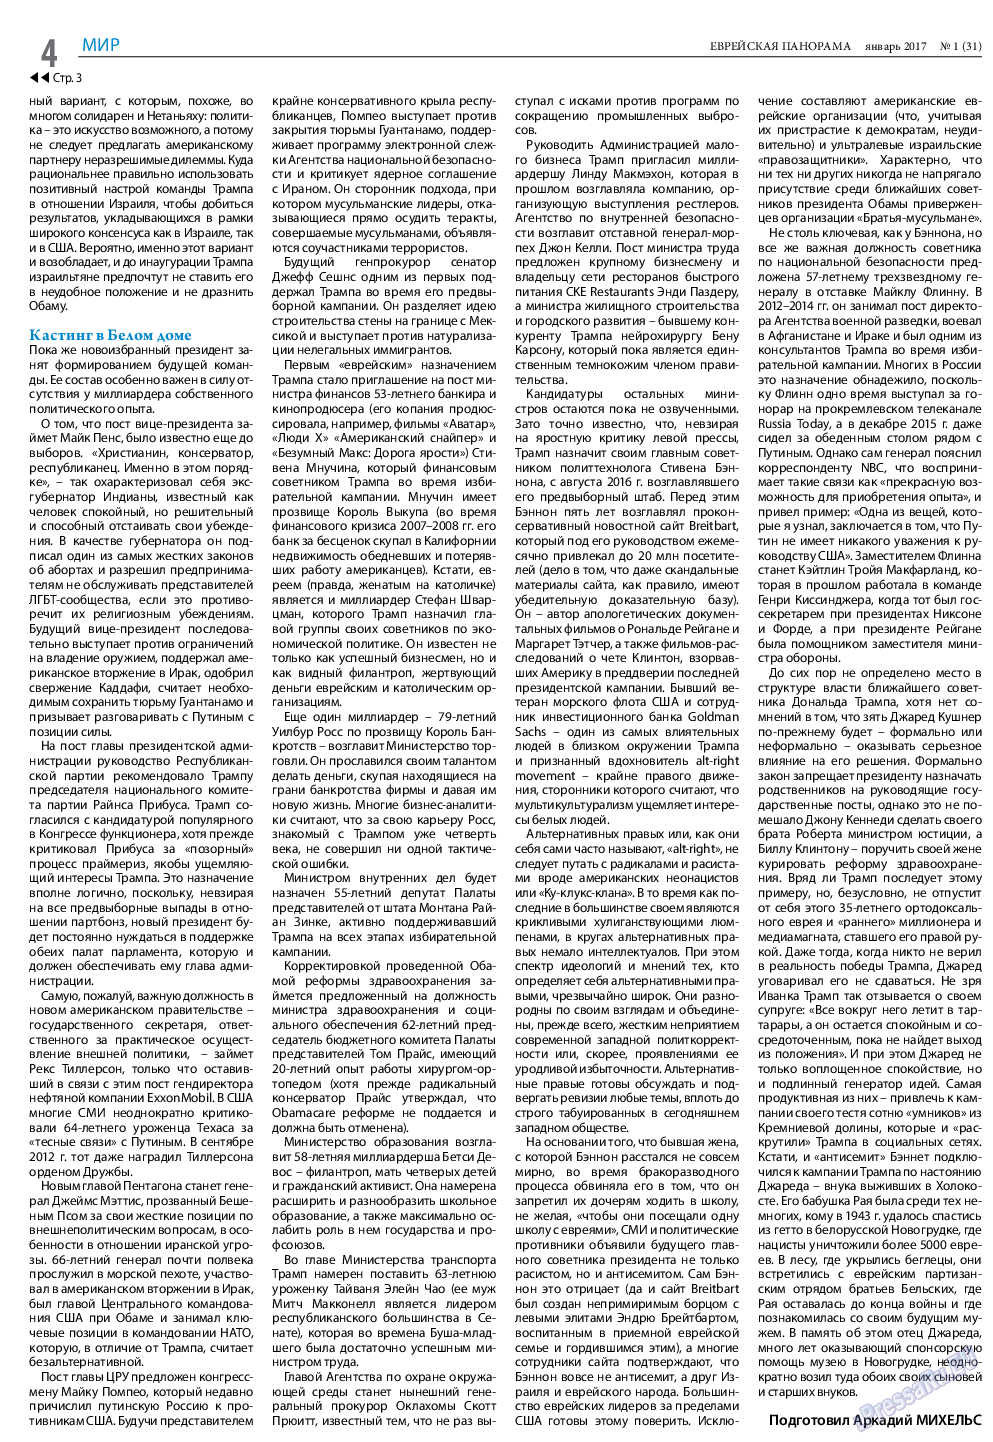 Еврейская панорама, газета. 2017 №1 стр.4